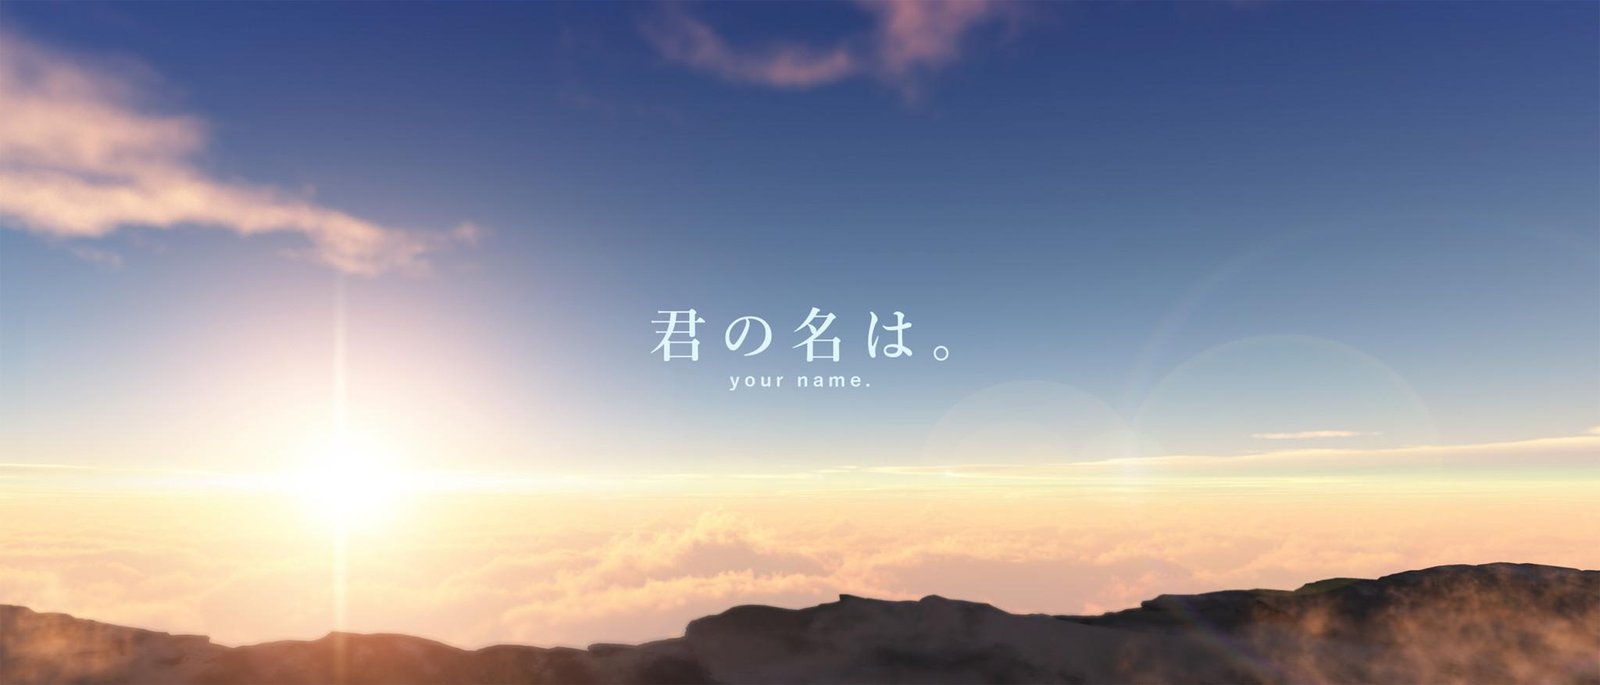 Kimi No Na Wa' Has Made Over $100 Million At The Japanese Box Office